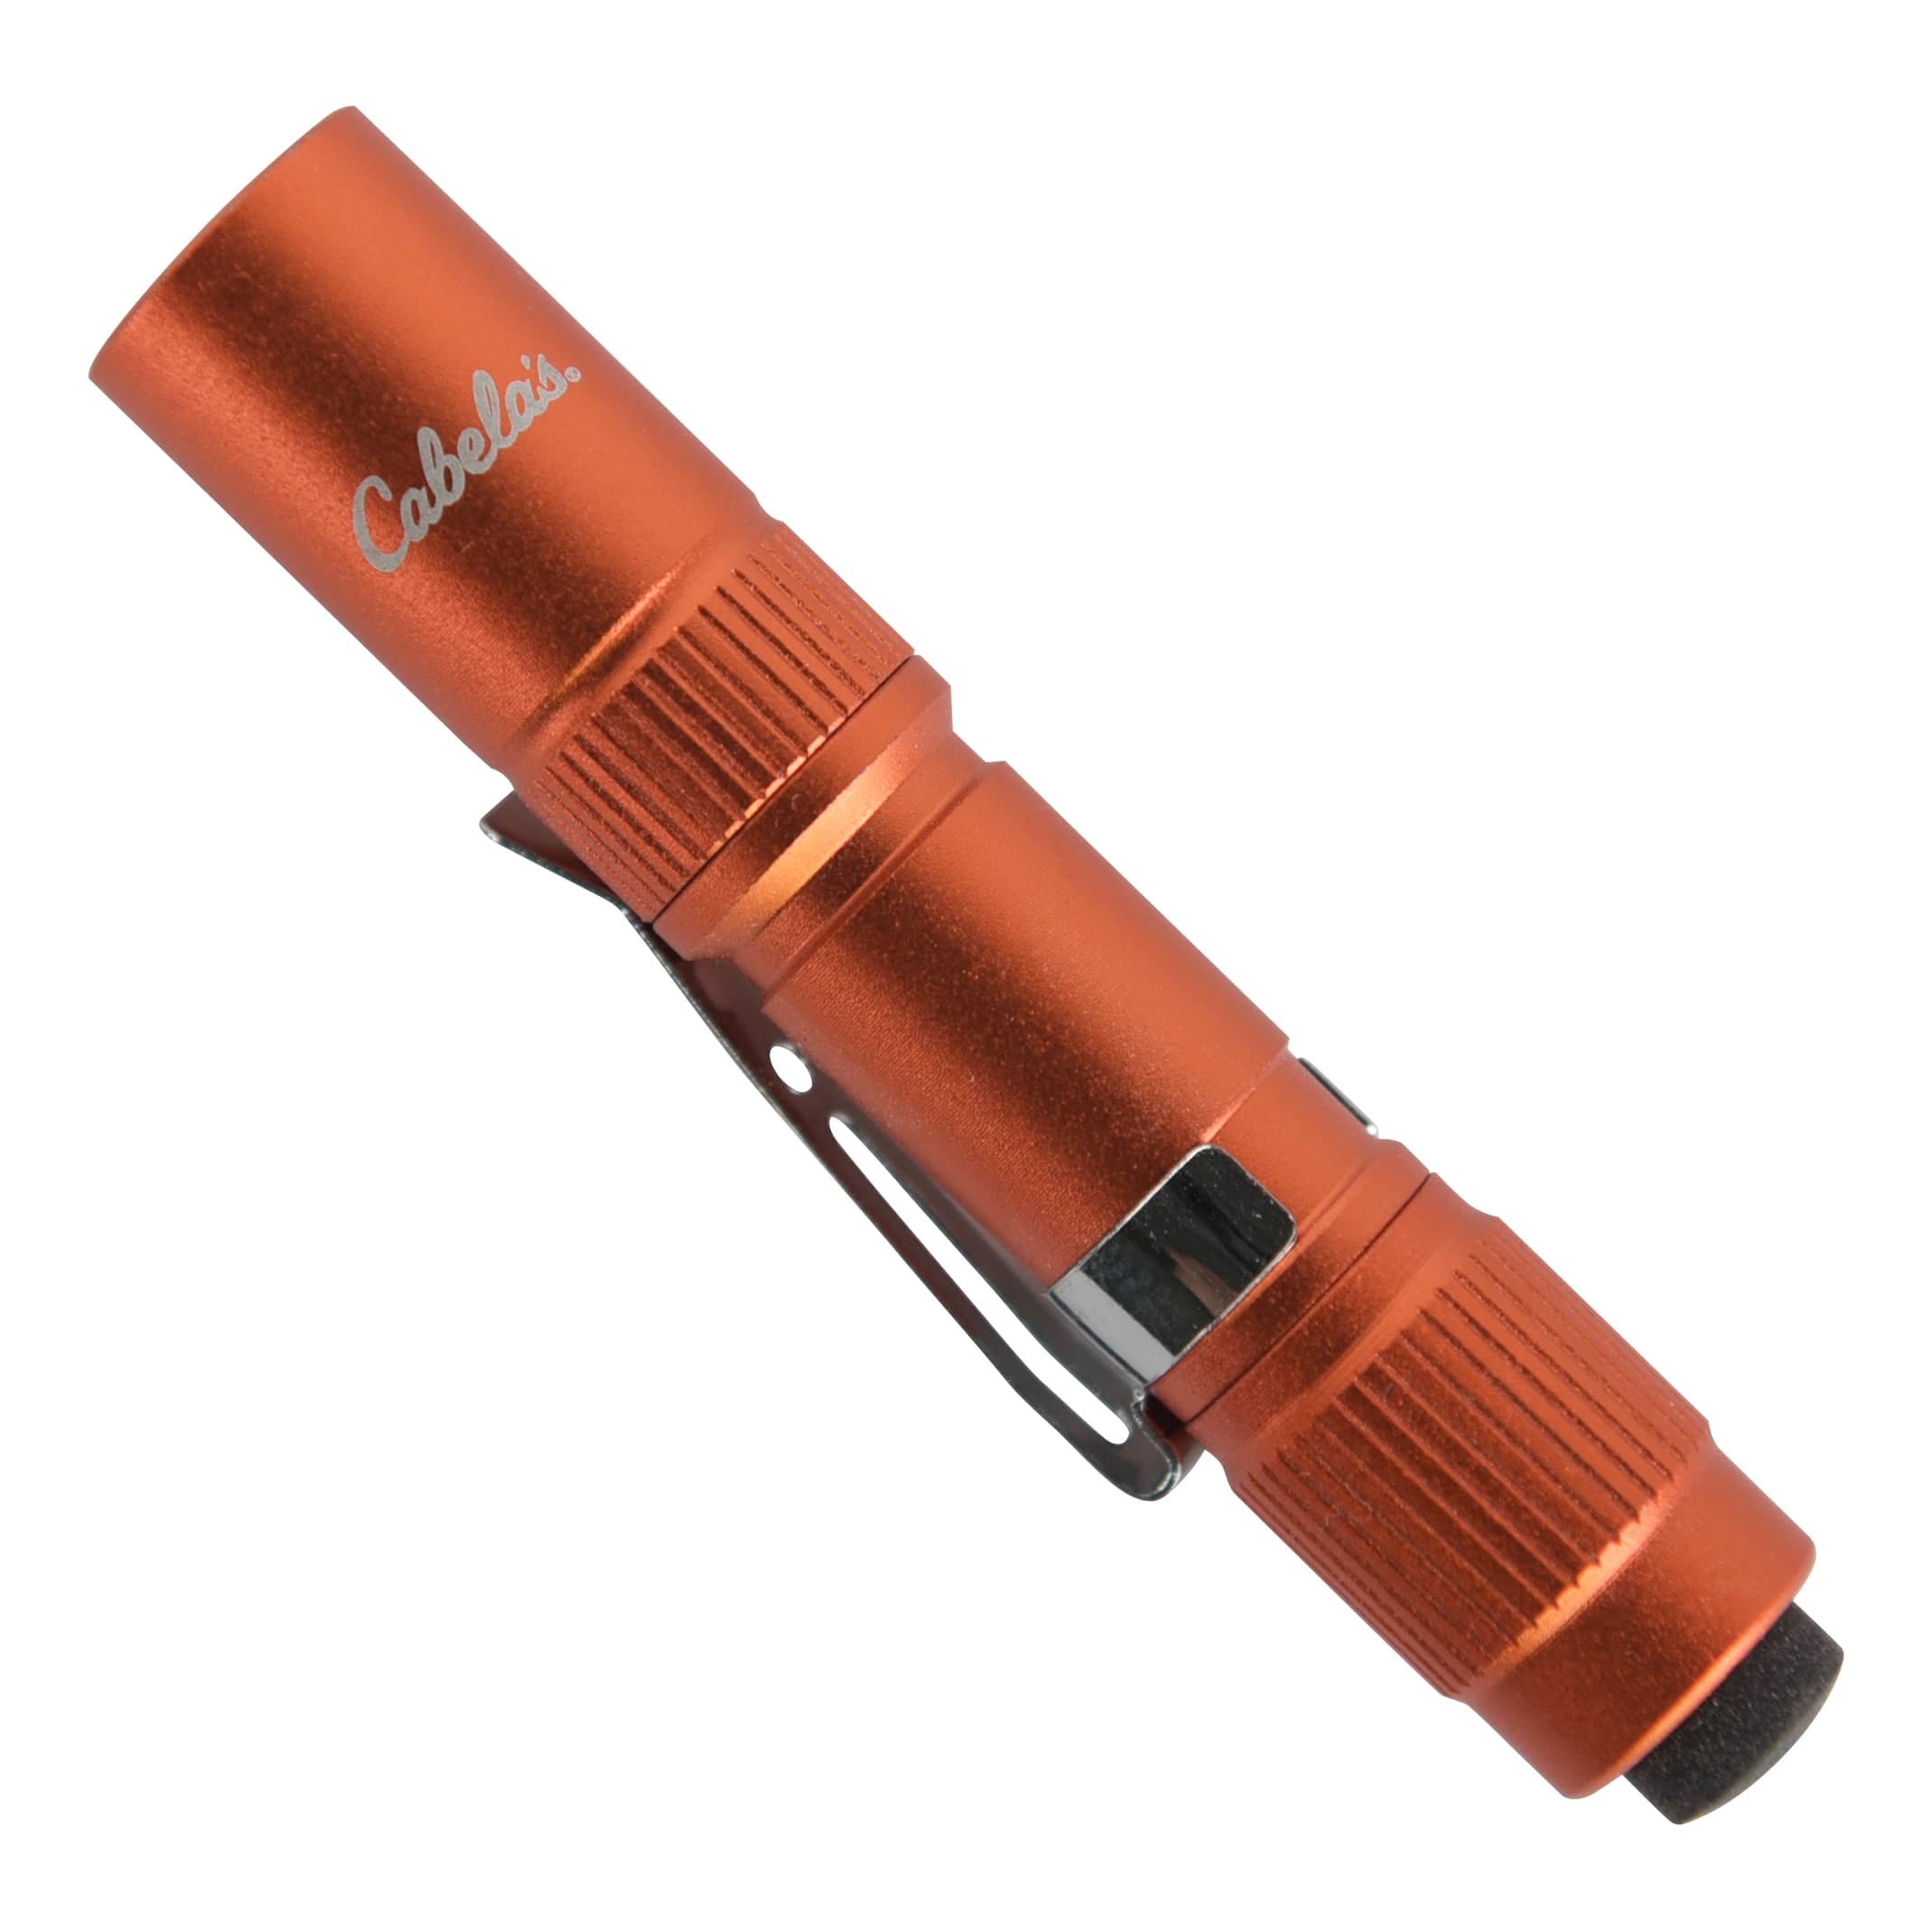 Cabela's Knife and Flashlight Combo with Waterproof Case - Orange - Flashlight View